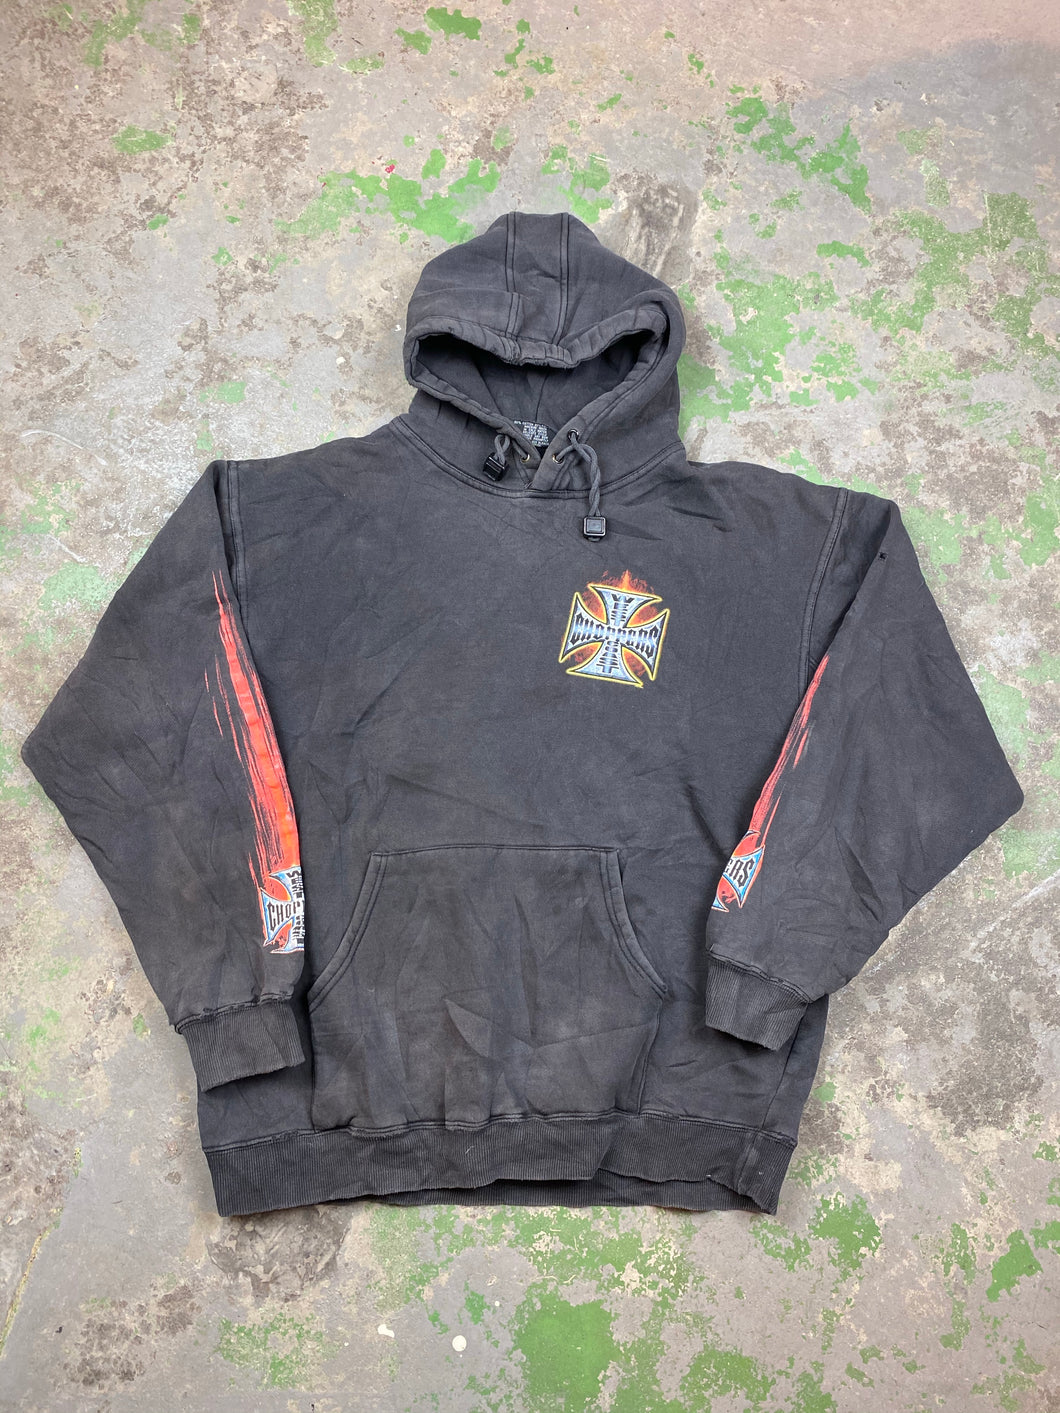 Thrashed 90s west coast choppers hoodie